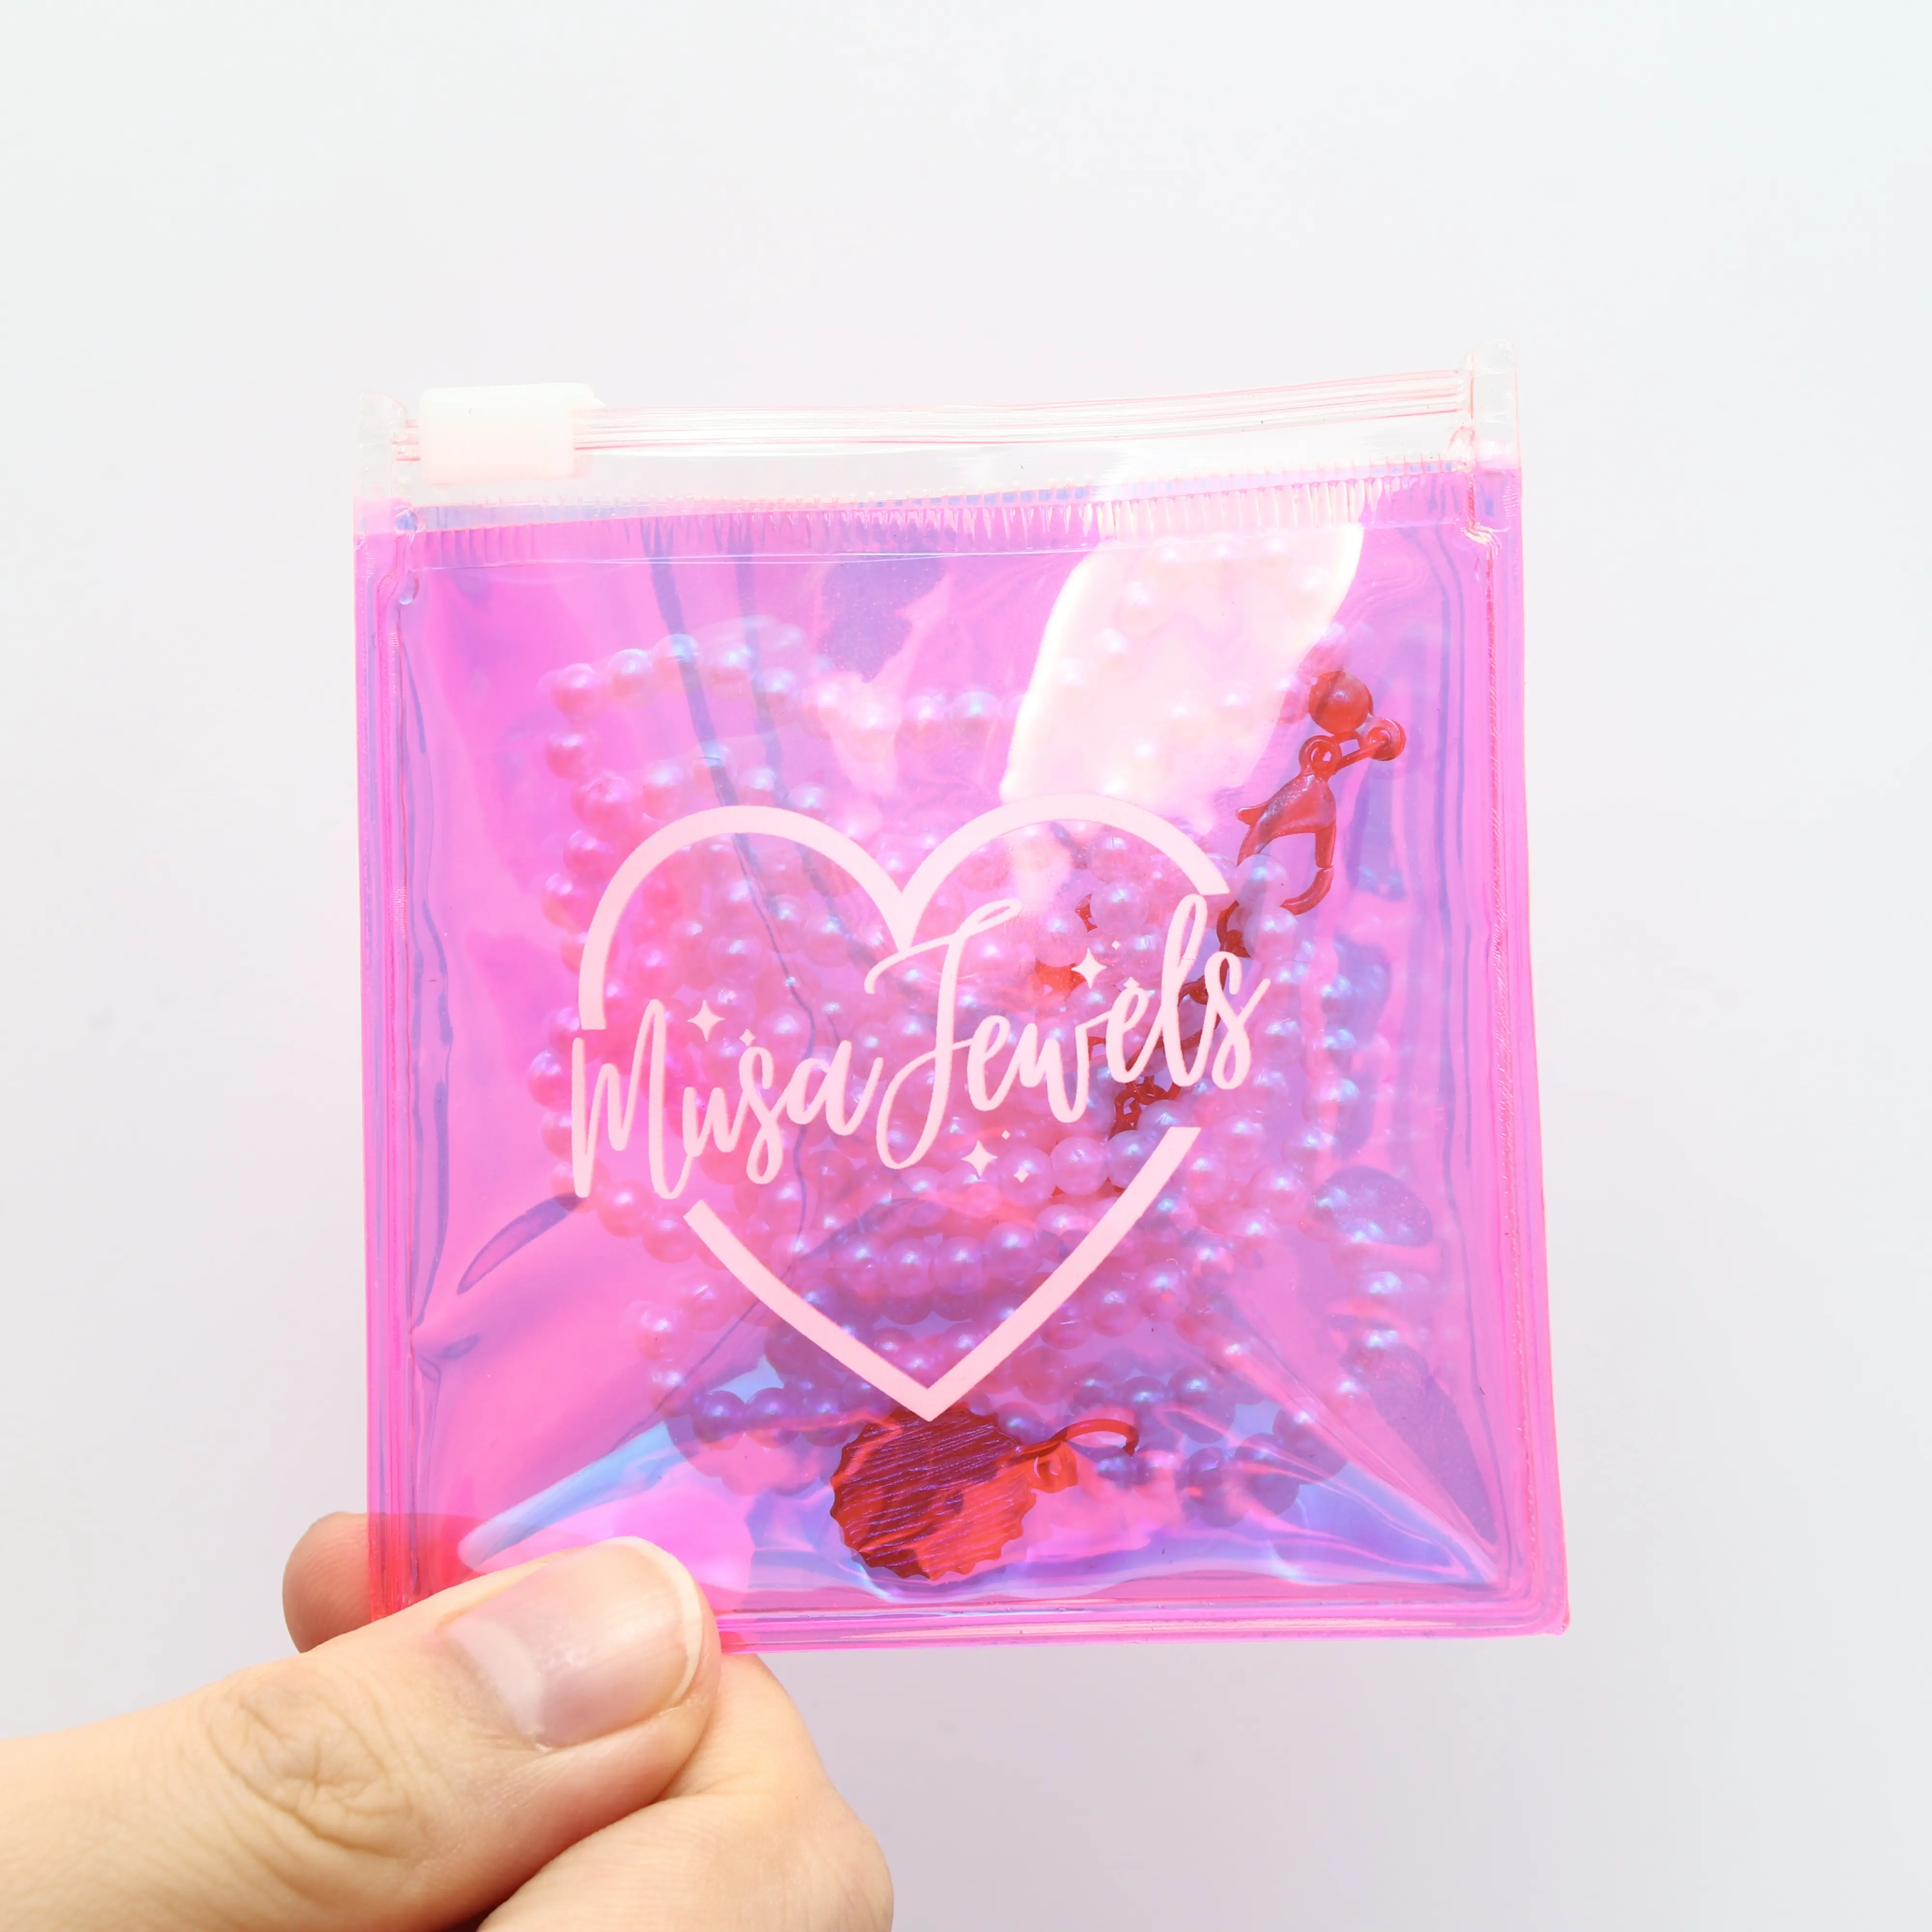 Bolsa pequeña de lujo con cremallera de plástico holográfica de PVC rosa de 6x6cm con logotipo blanco para joyas, accesorios de joyería, bolsa con cremallera